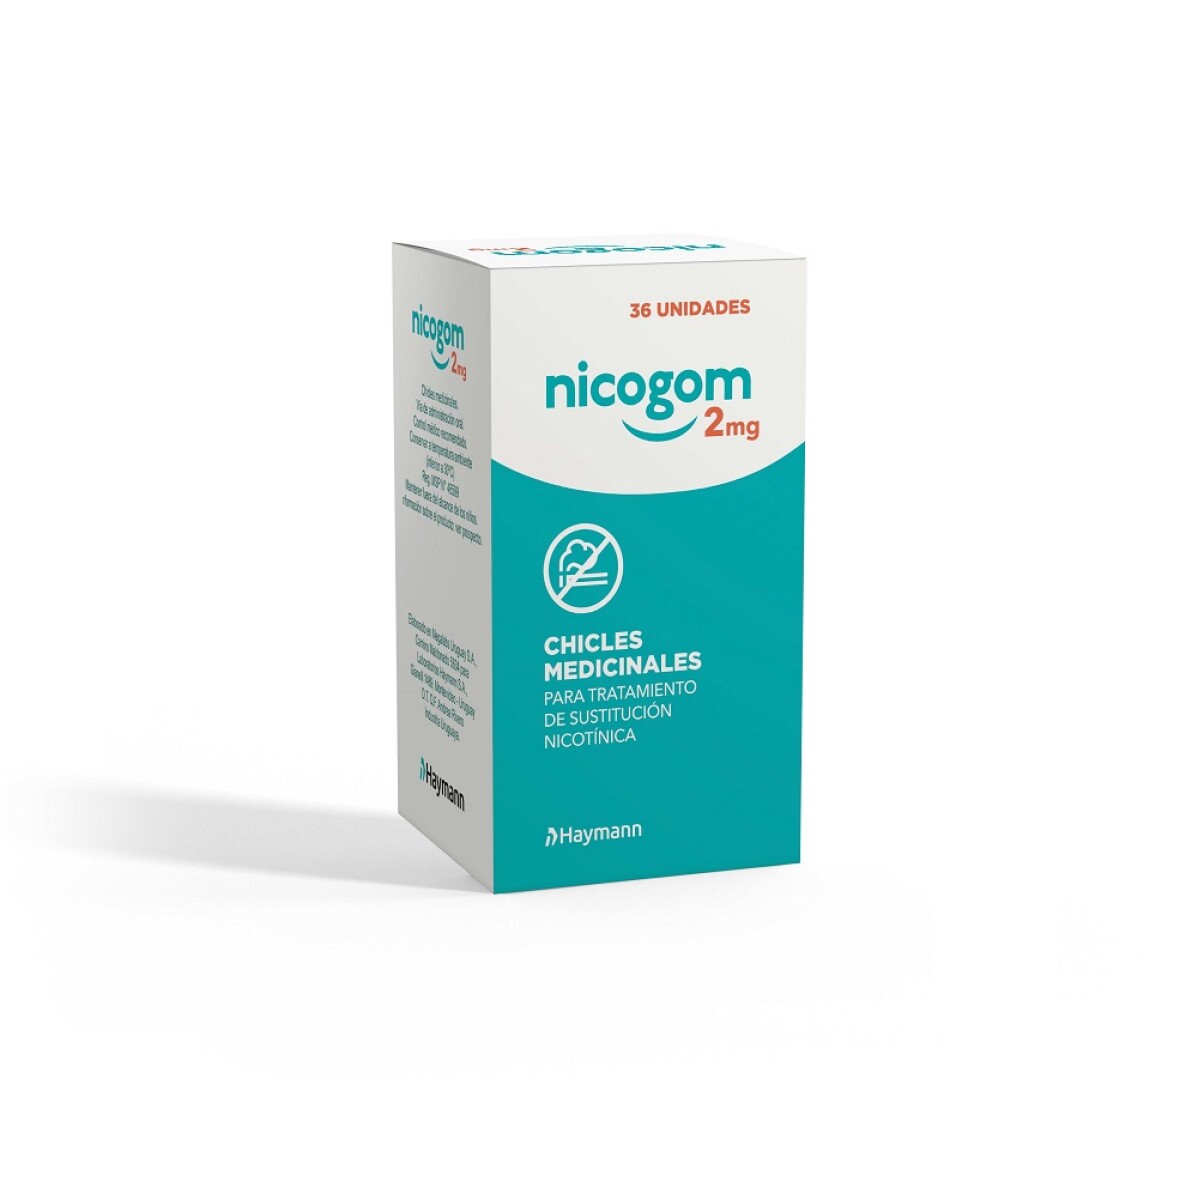 Nicogom 2 Mg. Chicle De Nicotina 36 Uds. 